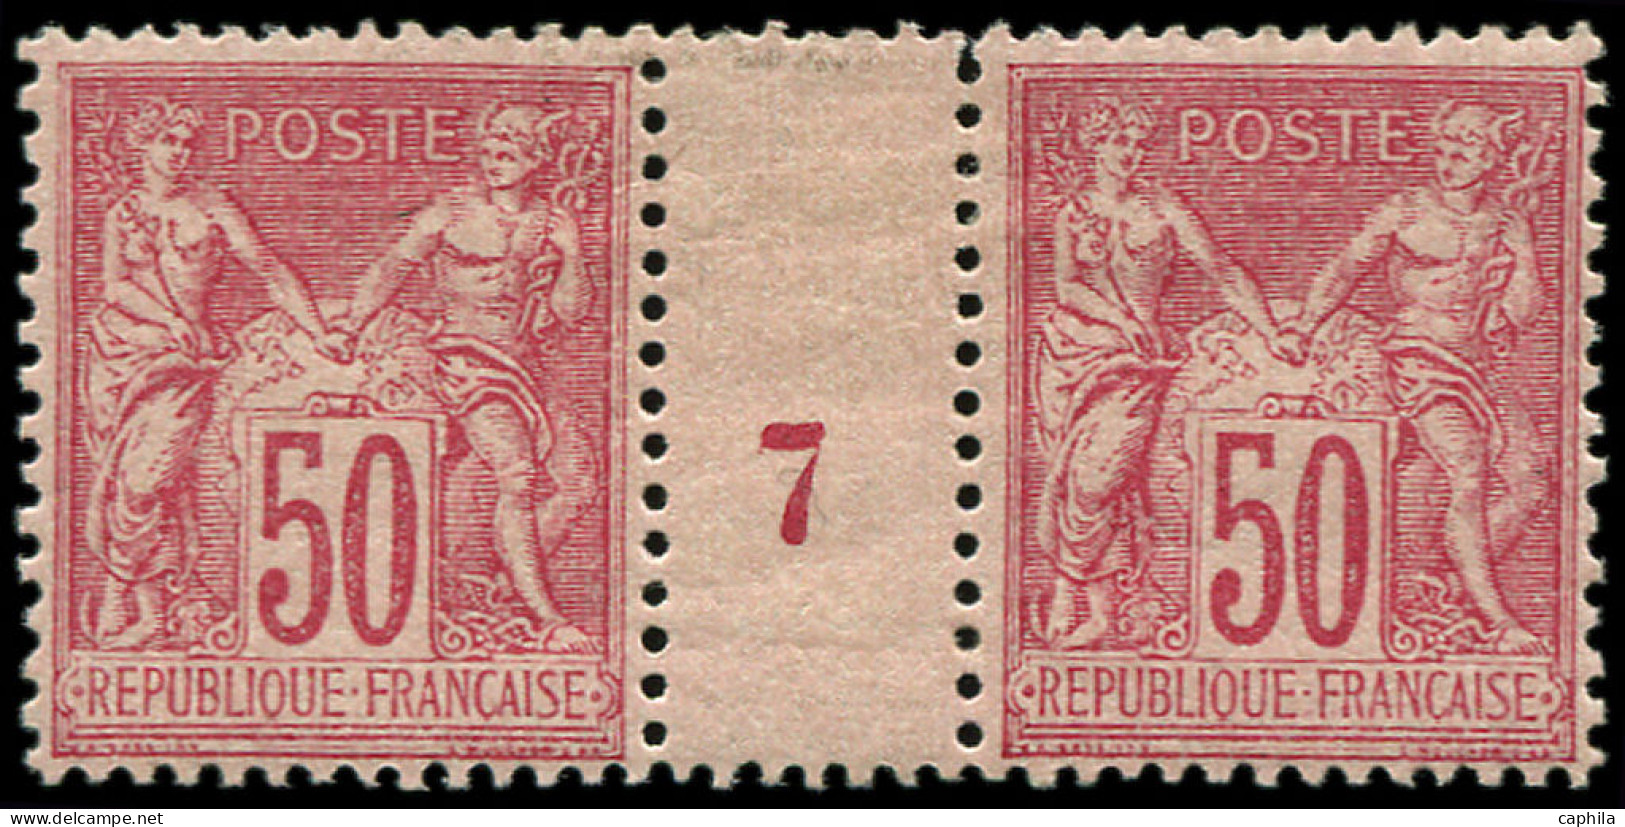 * FRANCE - Poste - 98, Paire Millésime "7": 50c. Rose - 1876-1898 Sage (Type II)